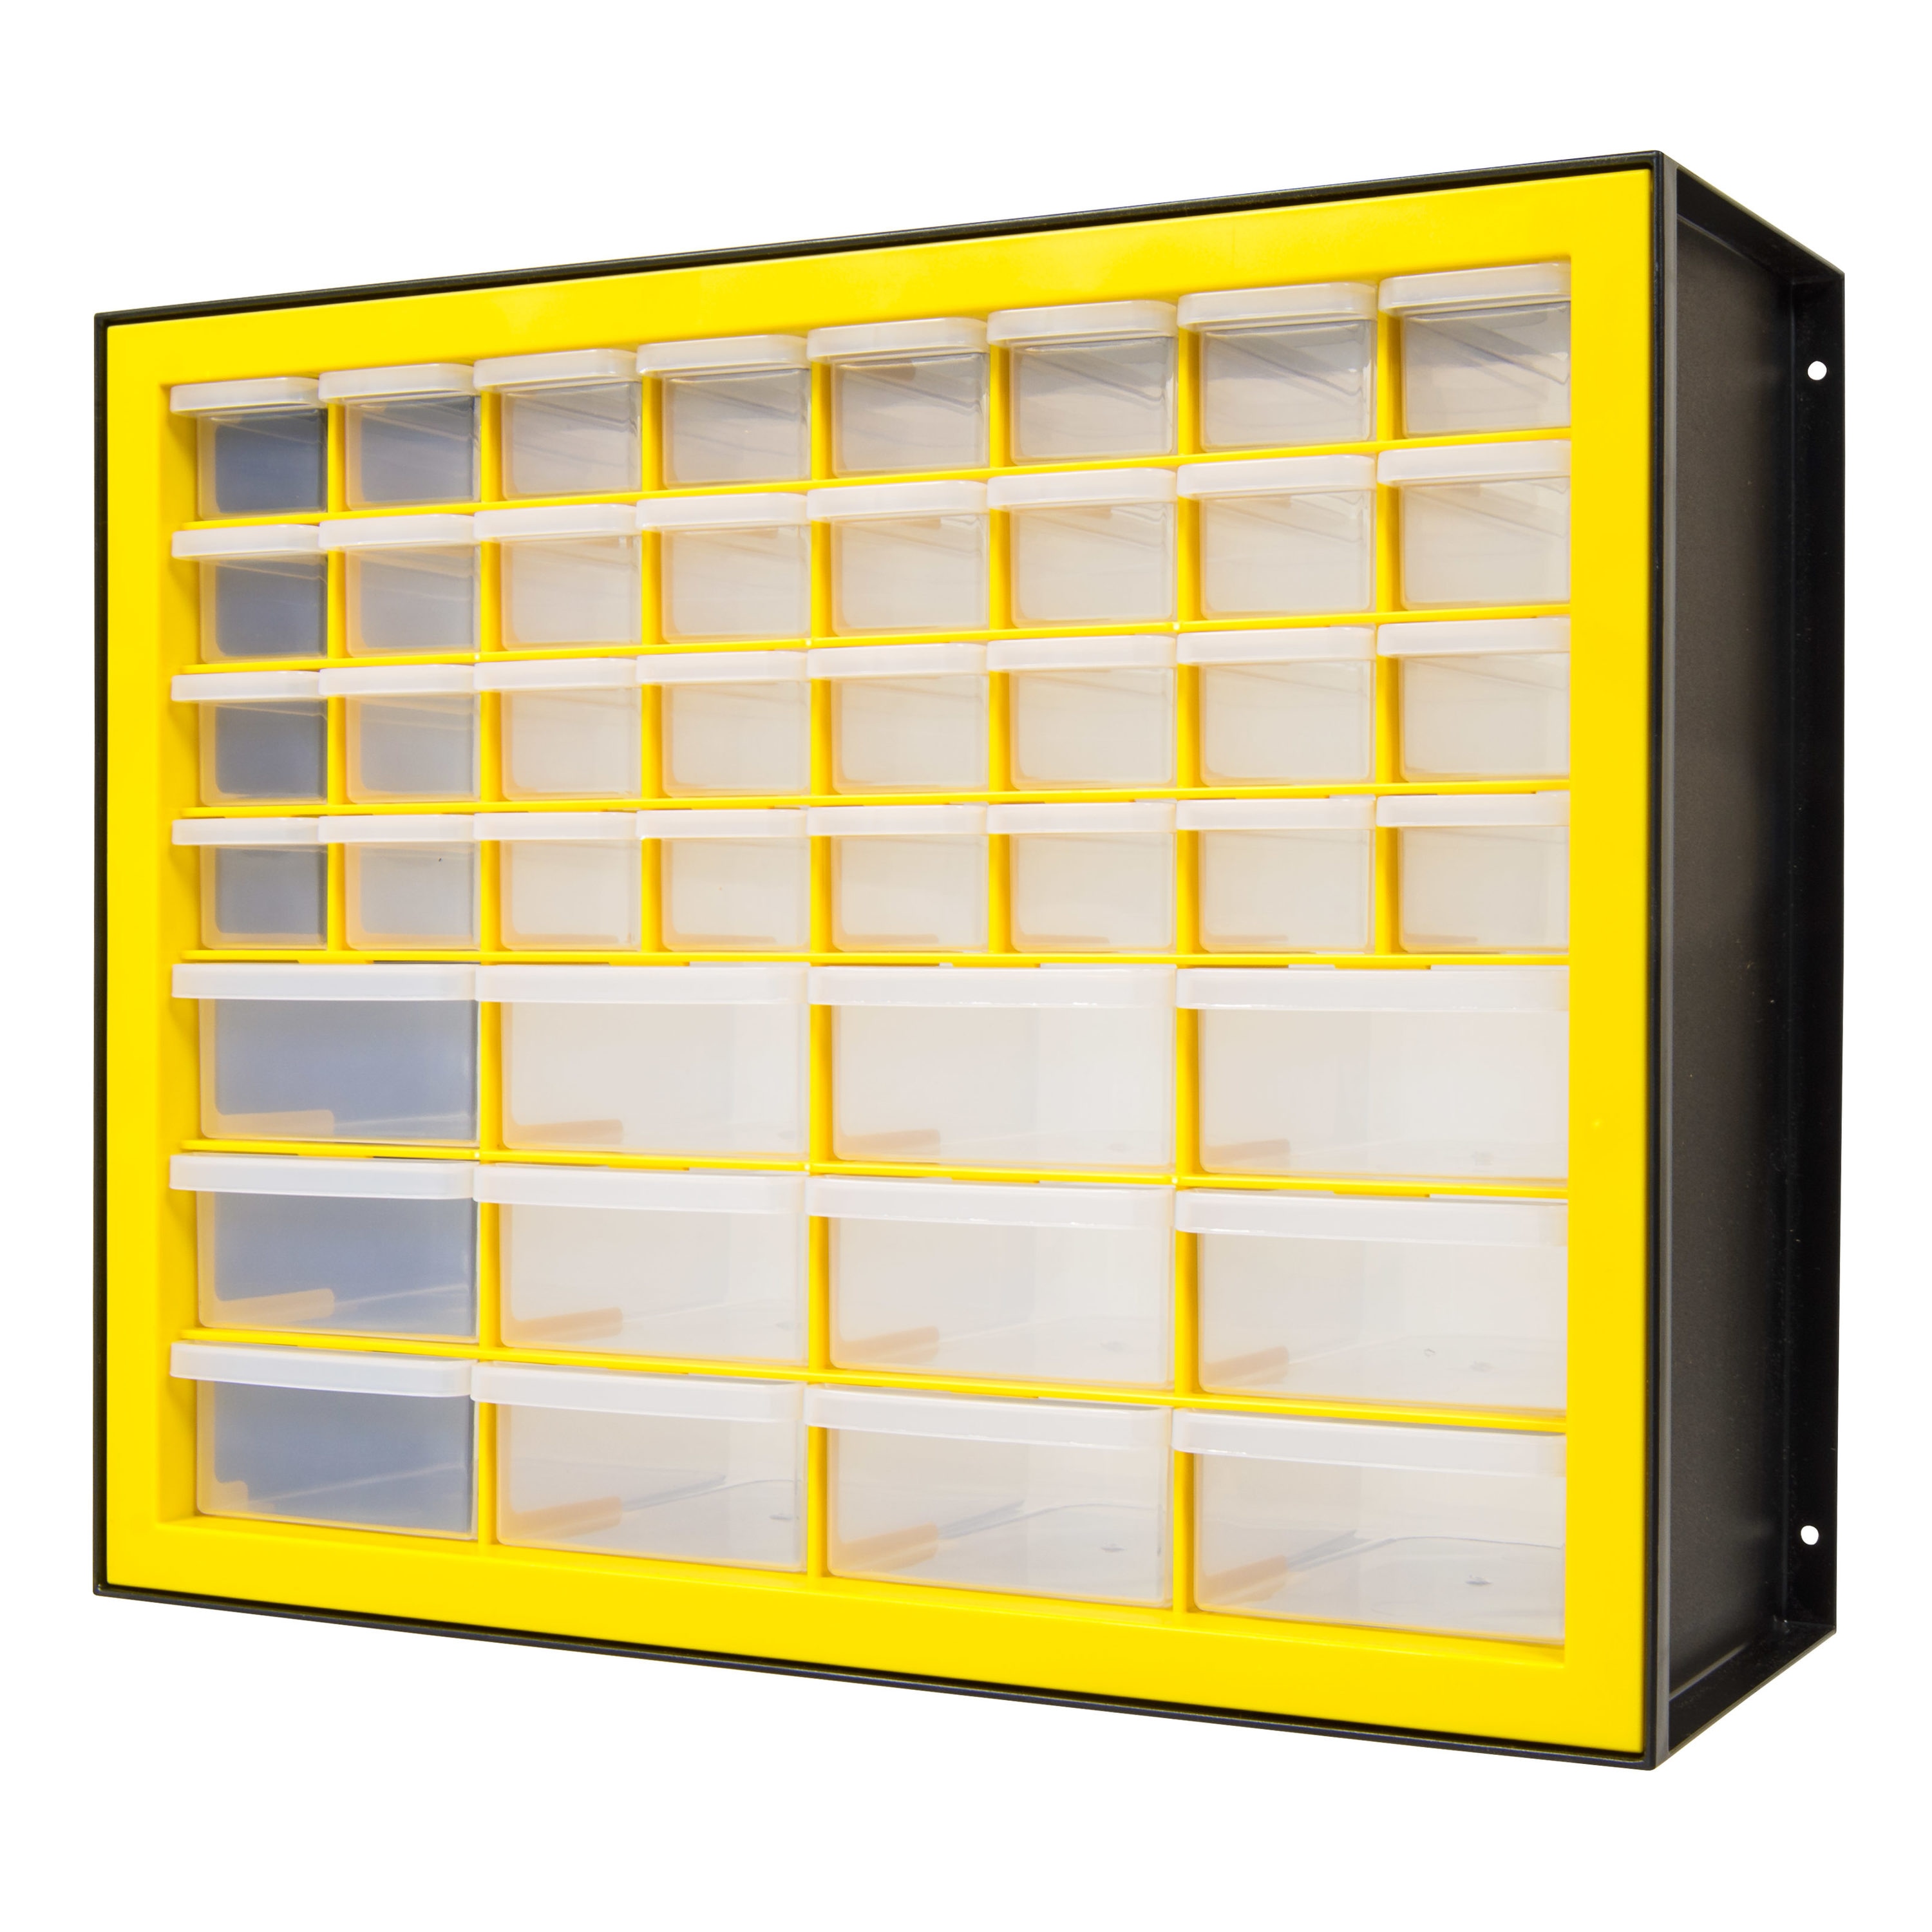 IRIS 44-Compartment Plastic Small Parts Organizer in the Small Parts  Organizers department at